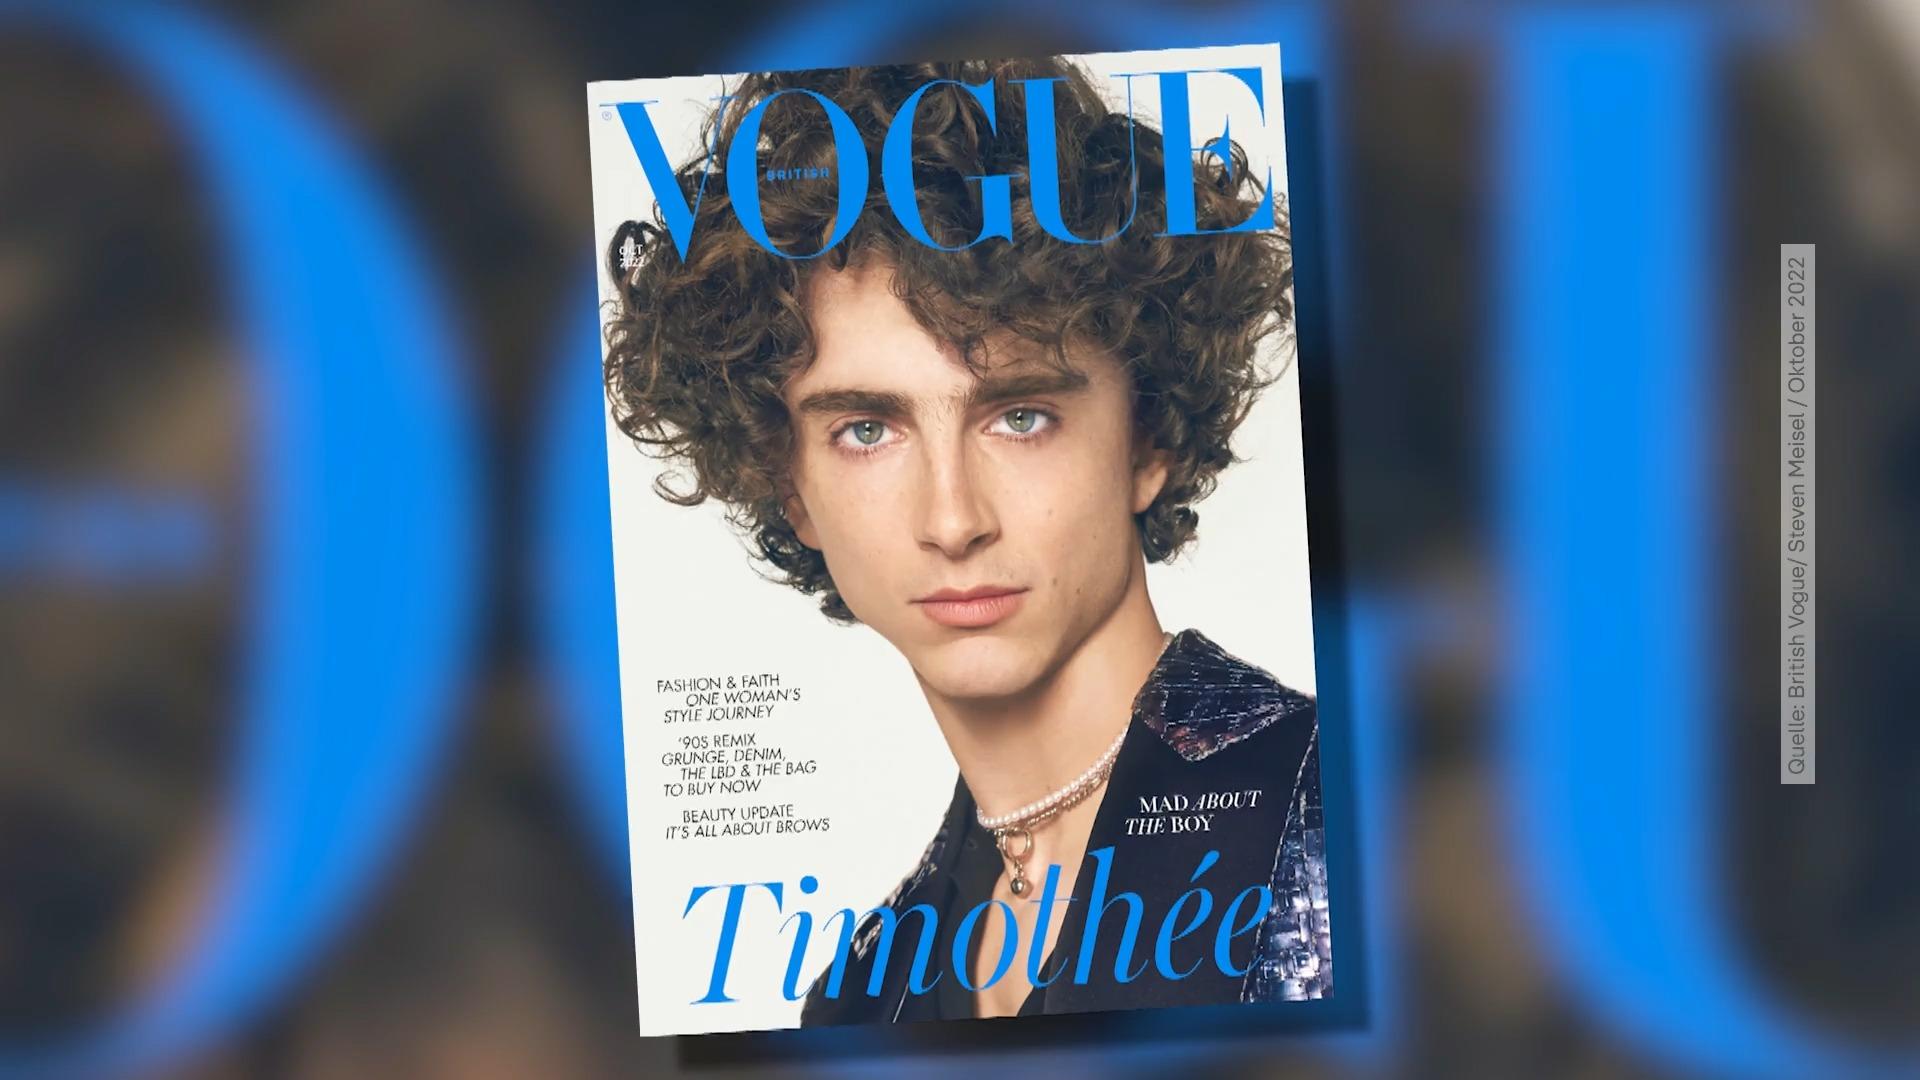 El actor estadounidense Timothée Chalamet hace historia "revista de moda"-cobertura